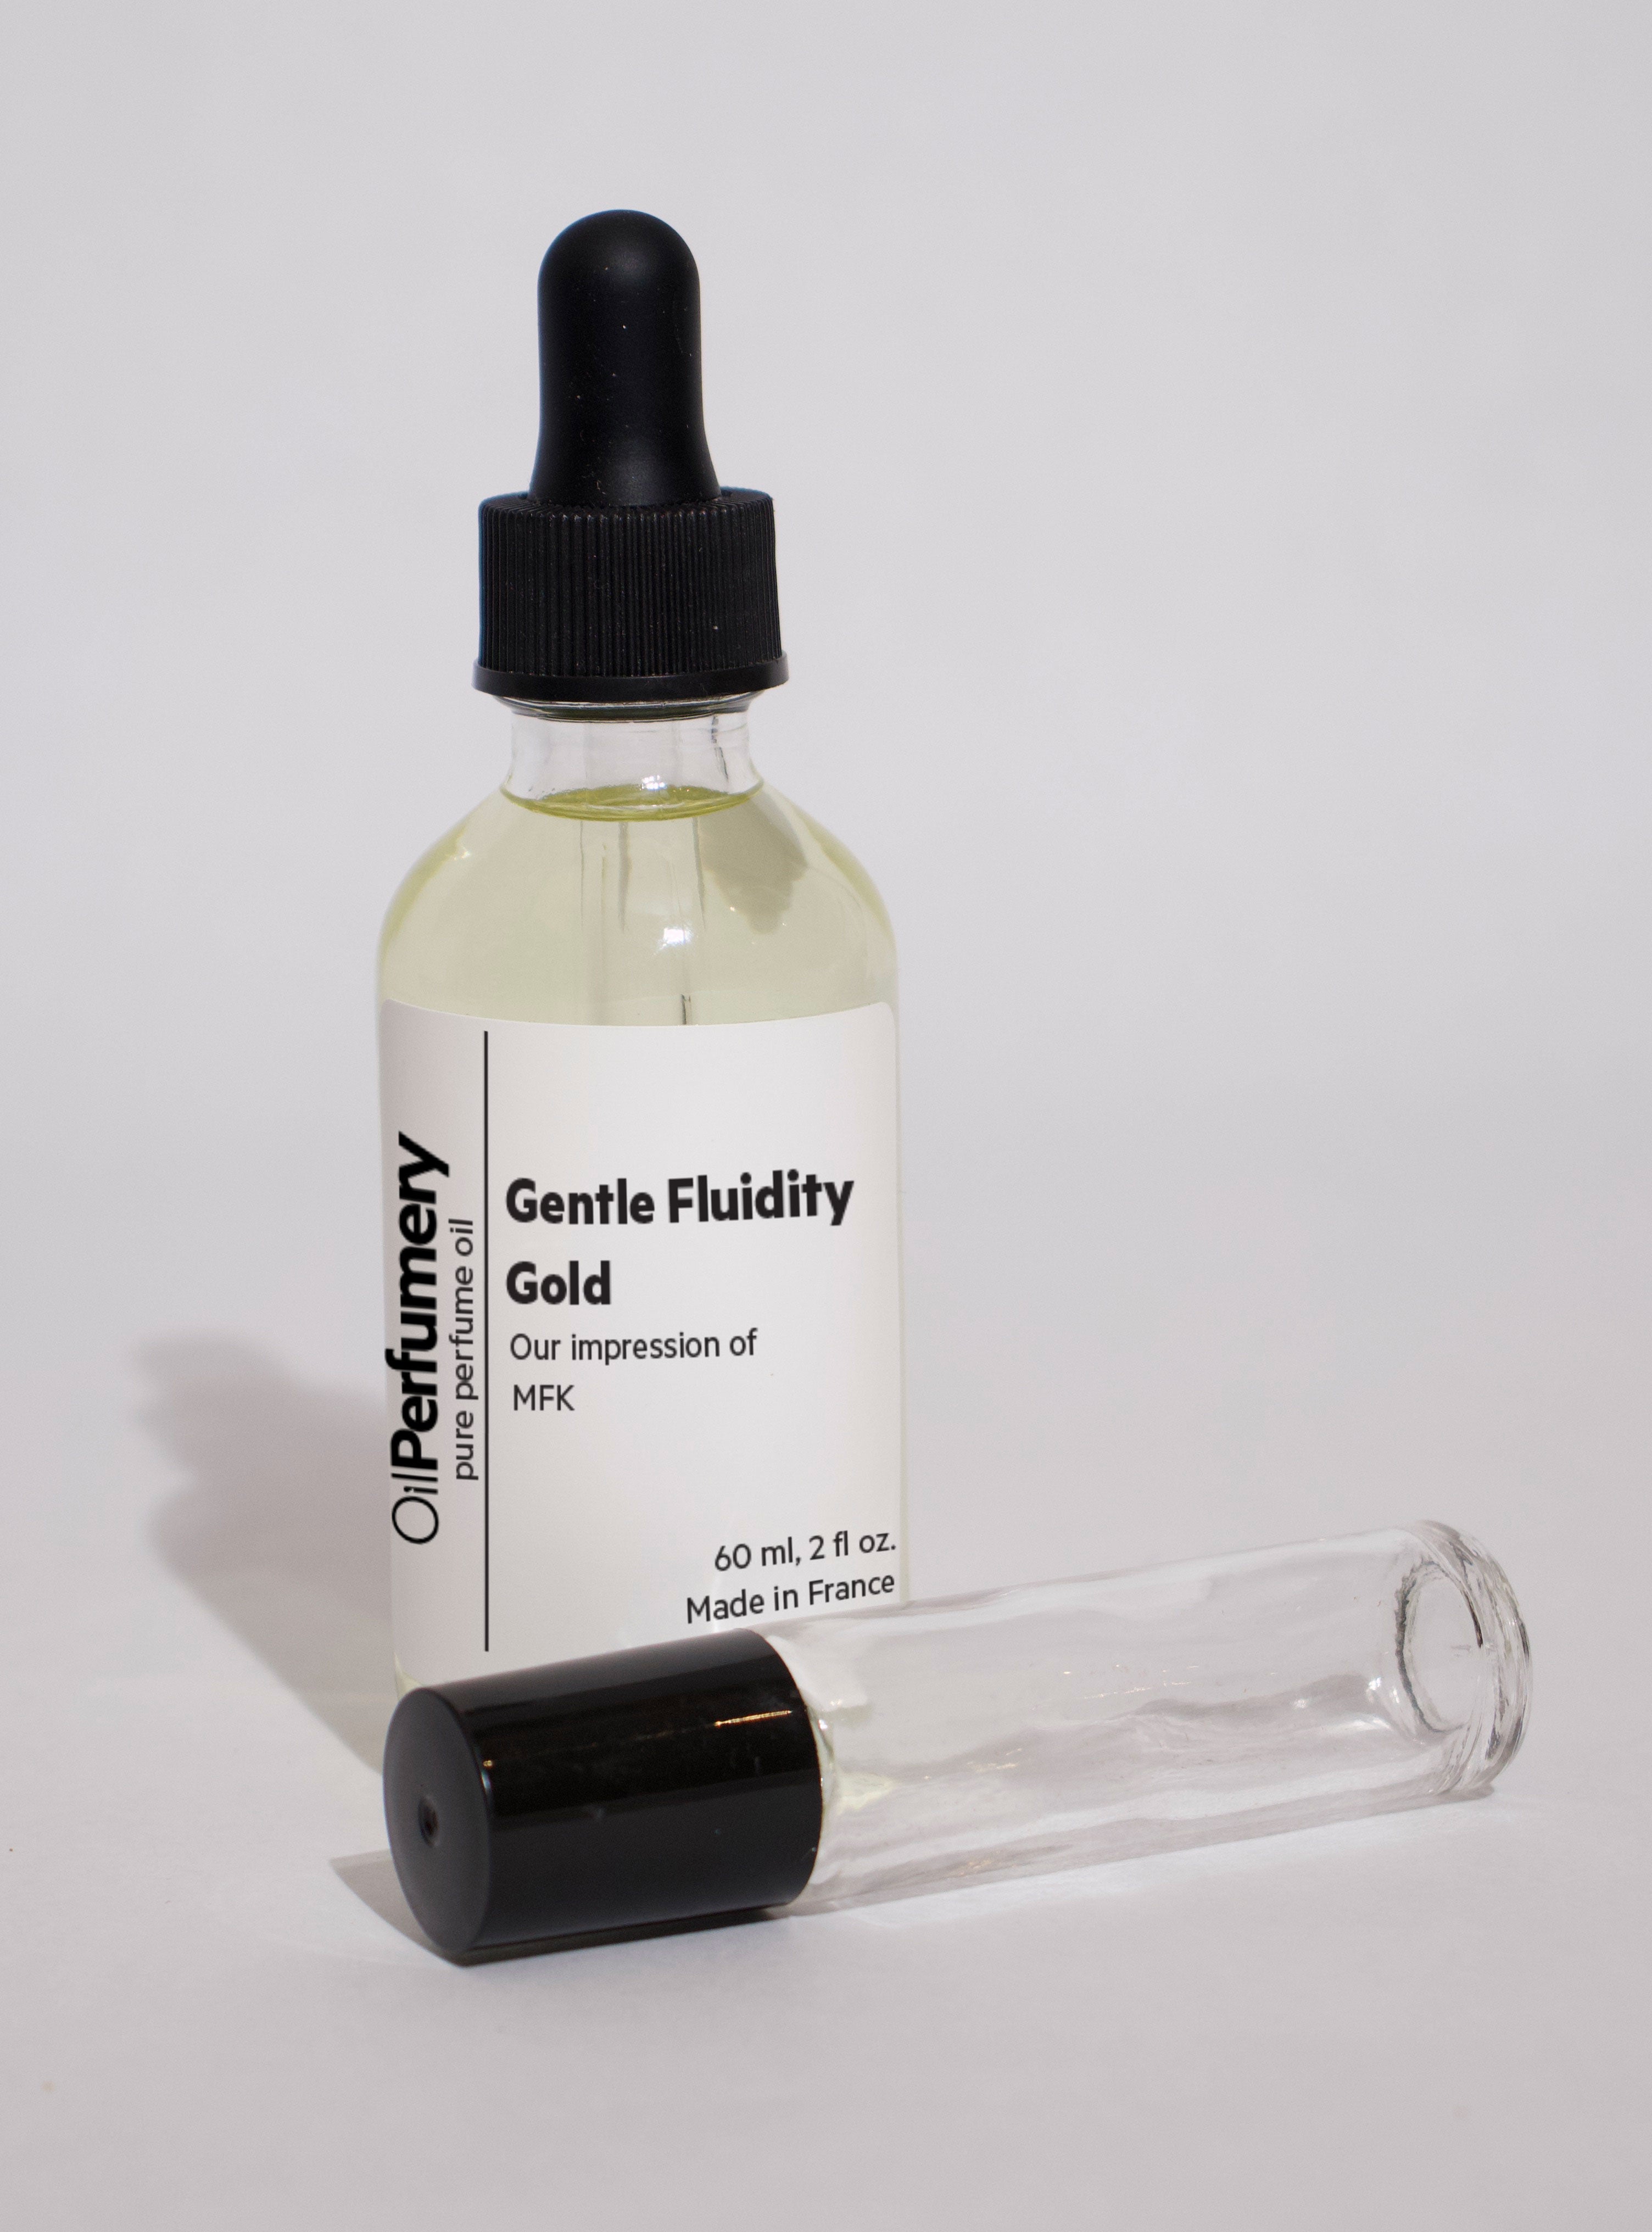 Oil Perfumery Impression of MFK - Gentle Fluidity Gold